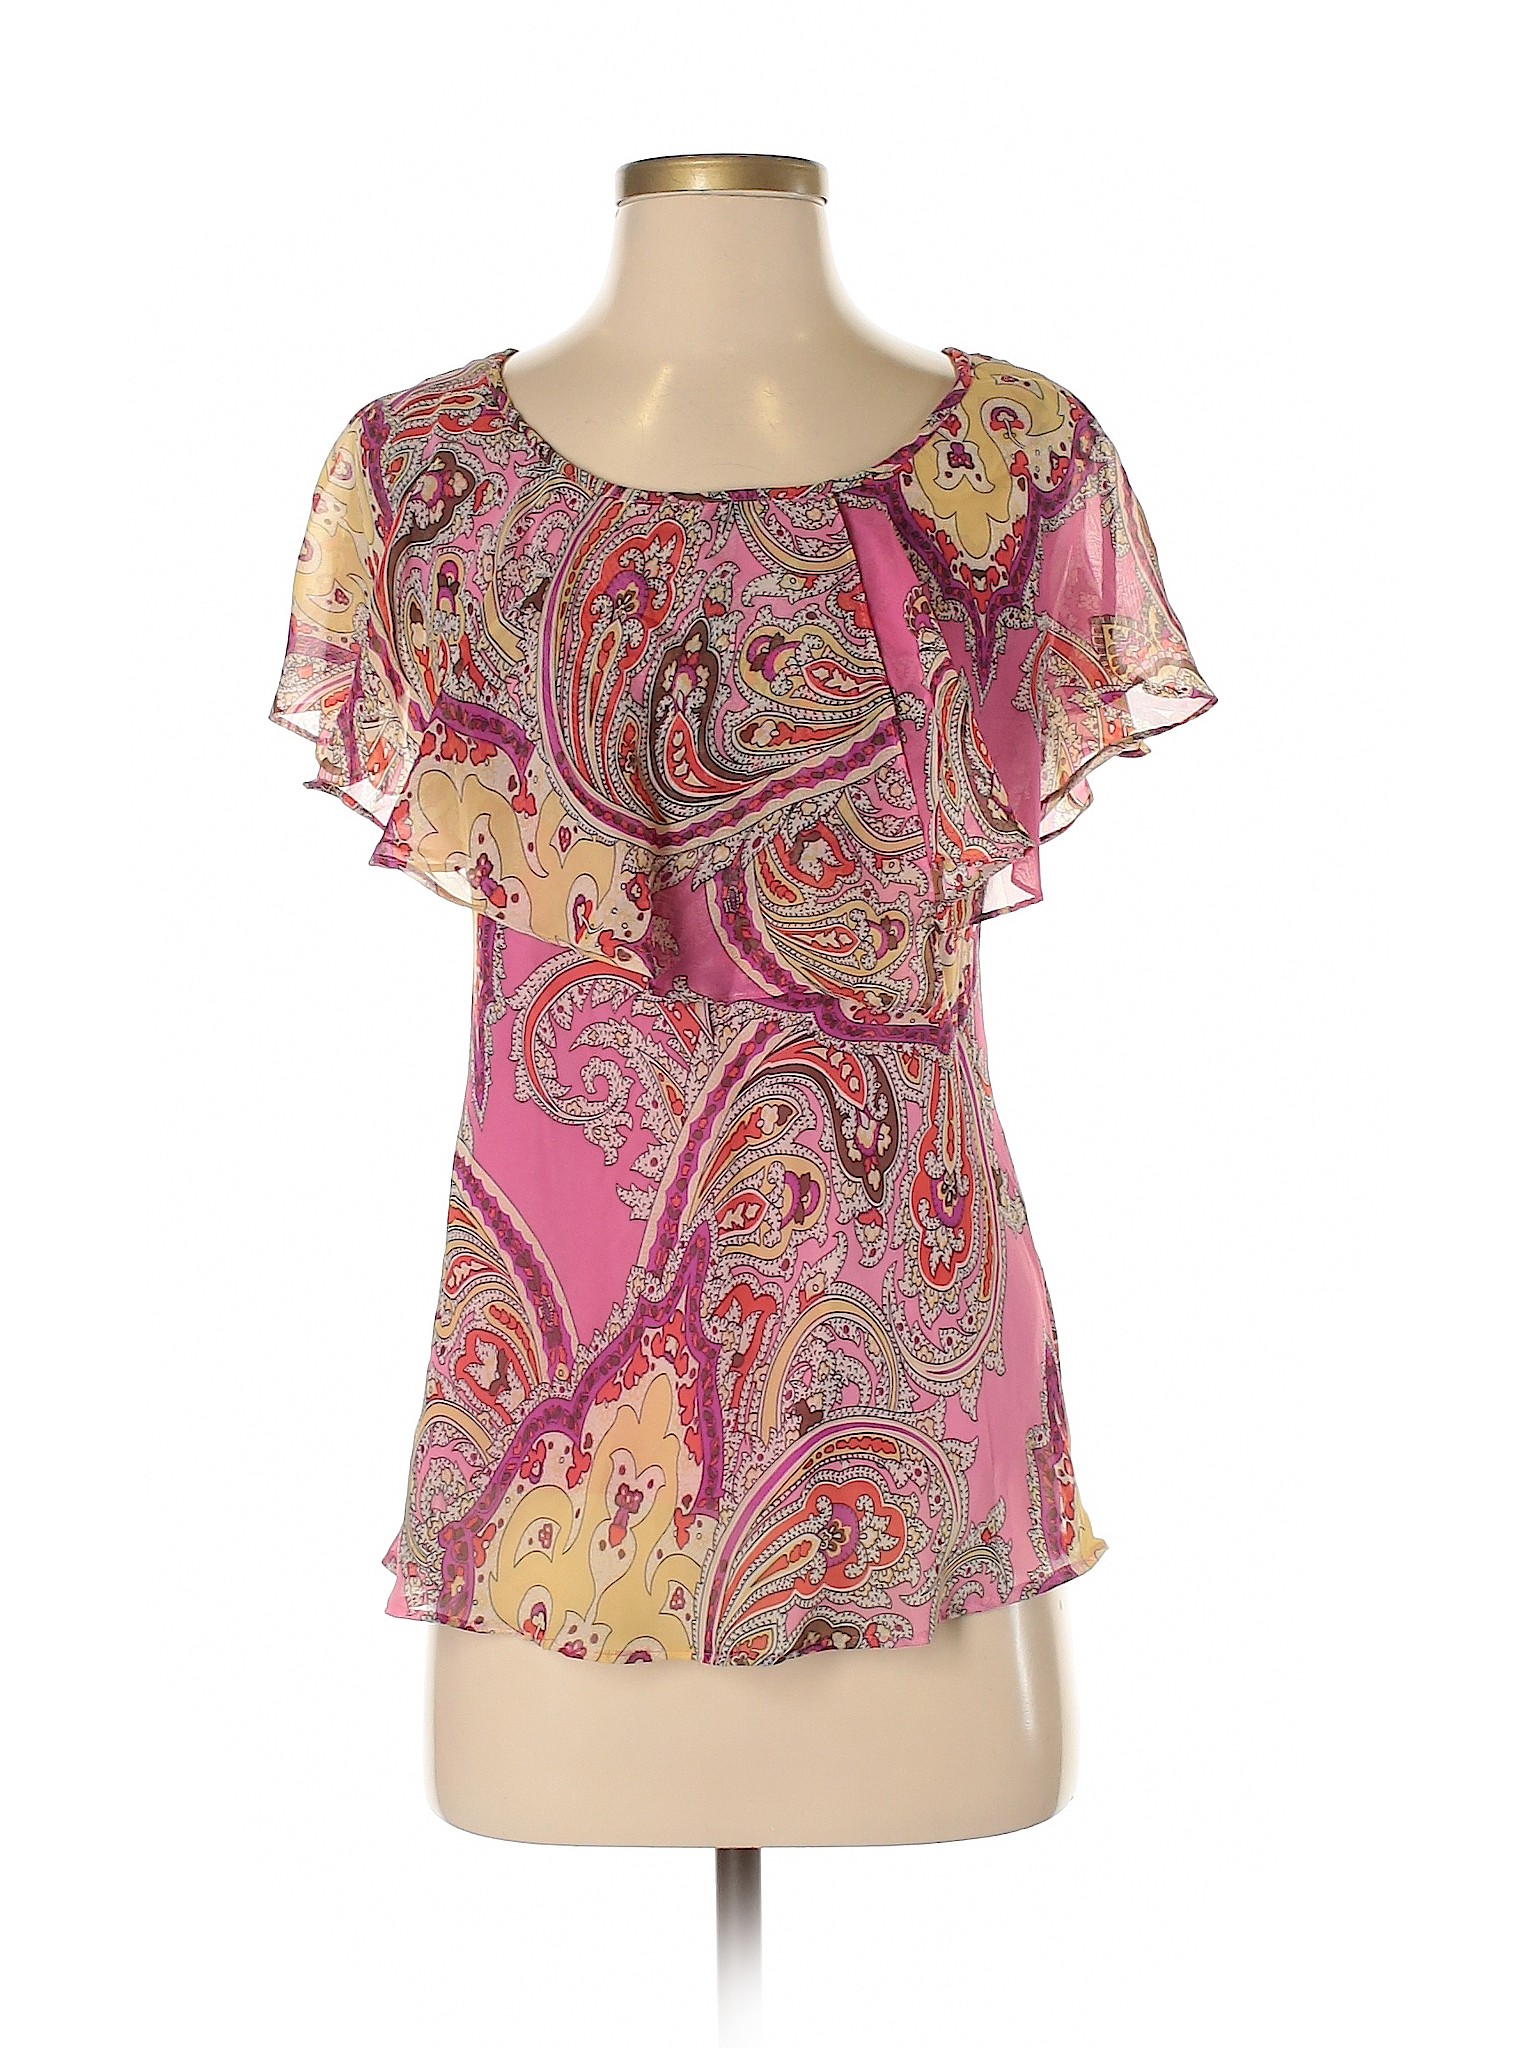 Sunny Leigh Women Pink Short Sleeve Blouse S | eBay